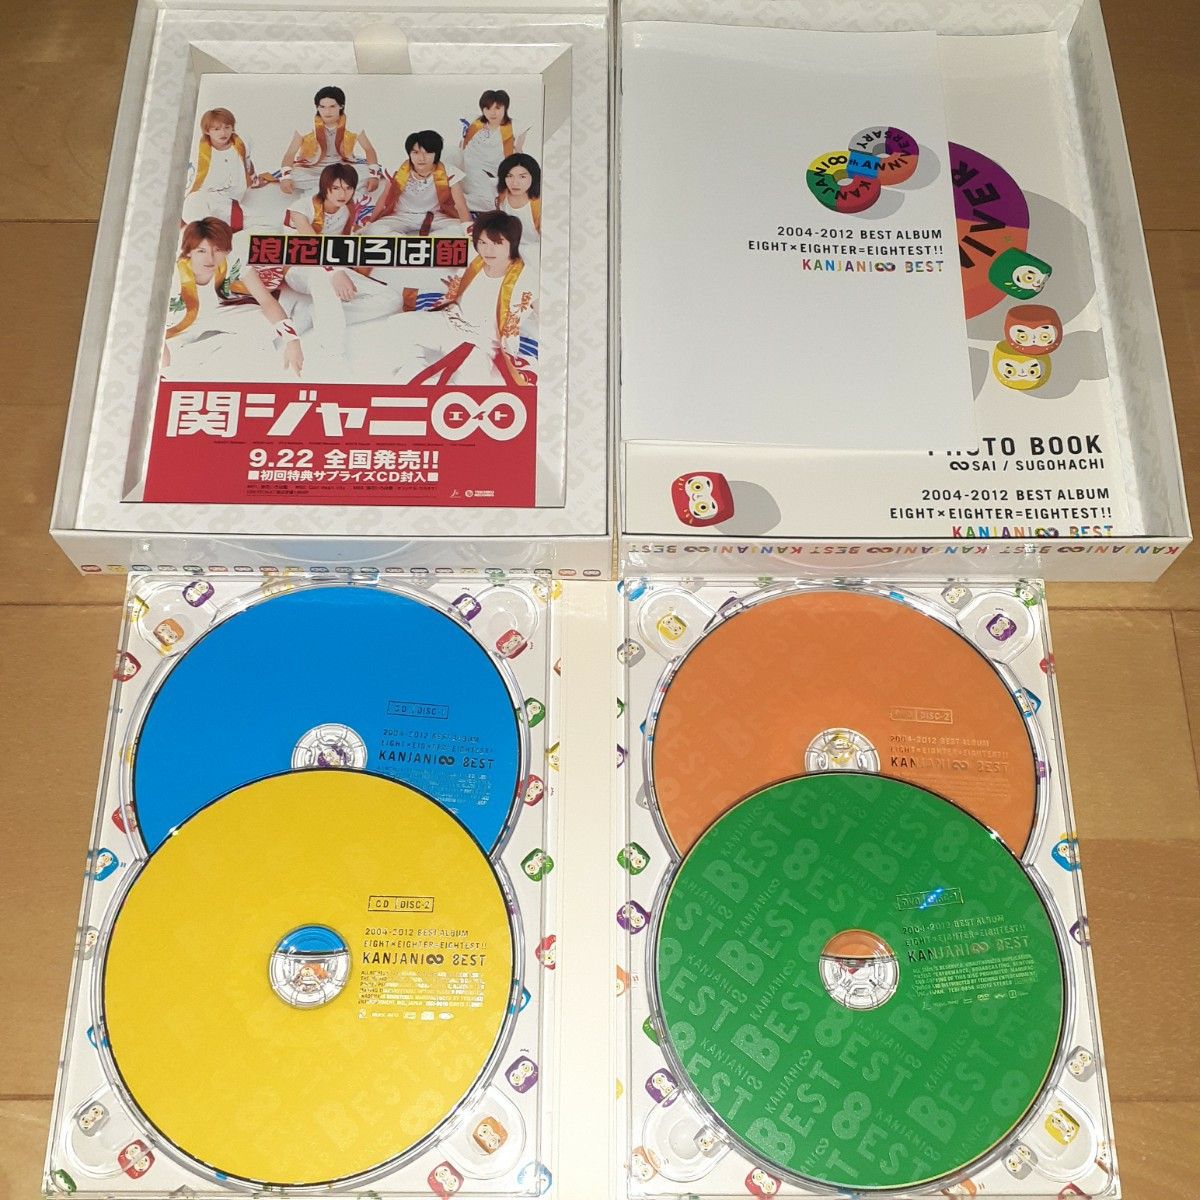 CD-DVD 8EST 初回A  DVD 関ジャニ∞リサイタル 真夏の俺らは罪なヤツ 関ジャニ∞  セット